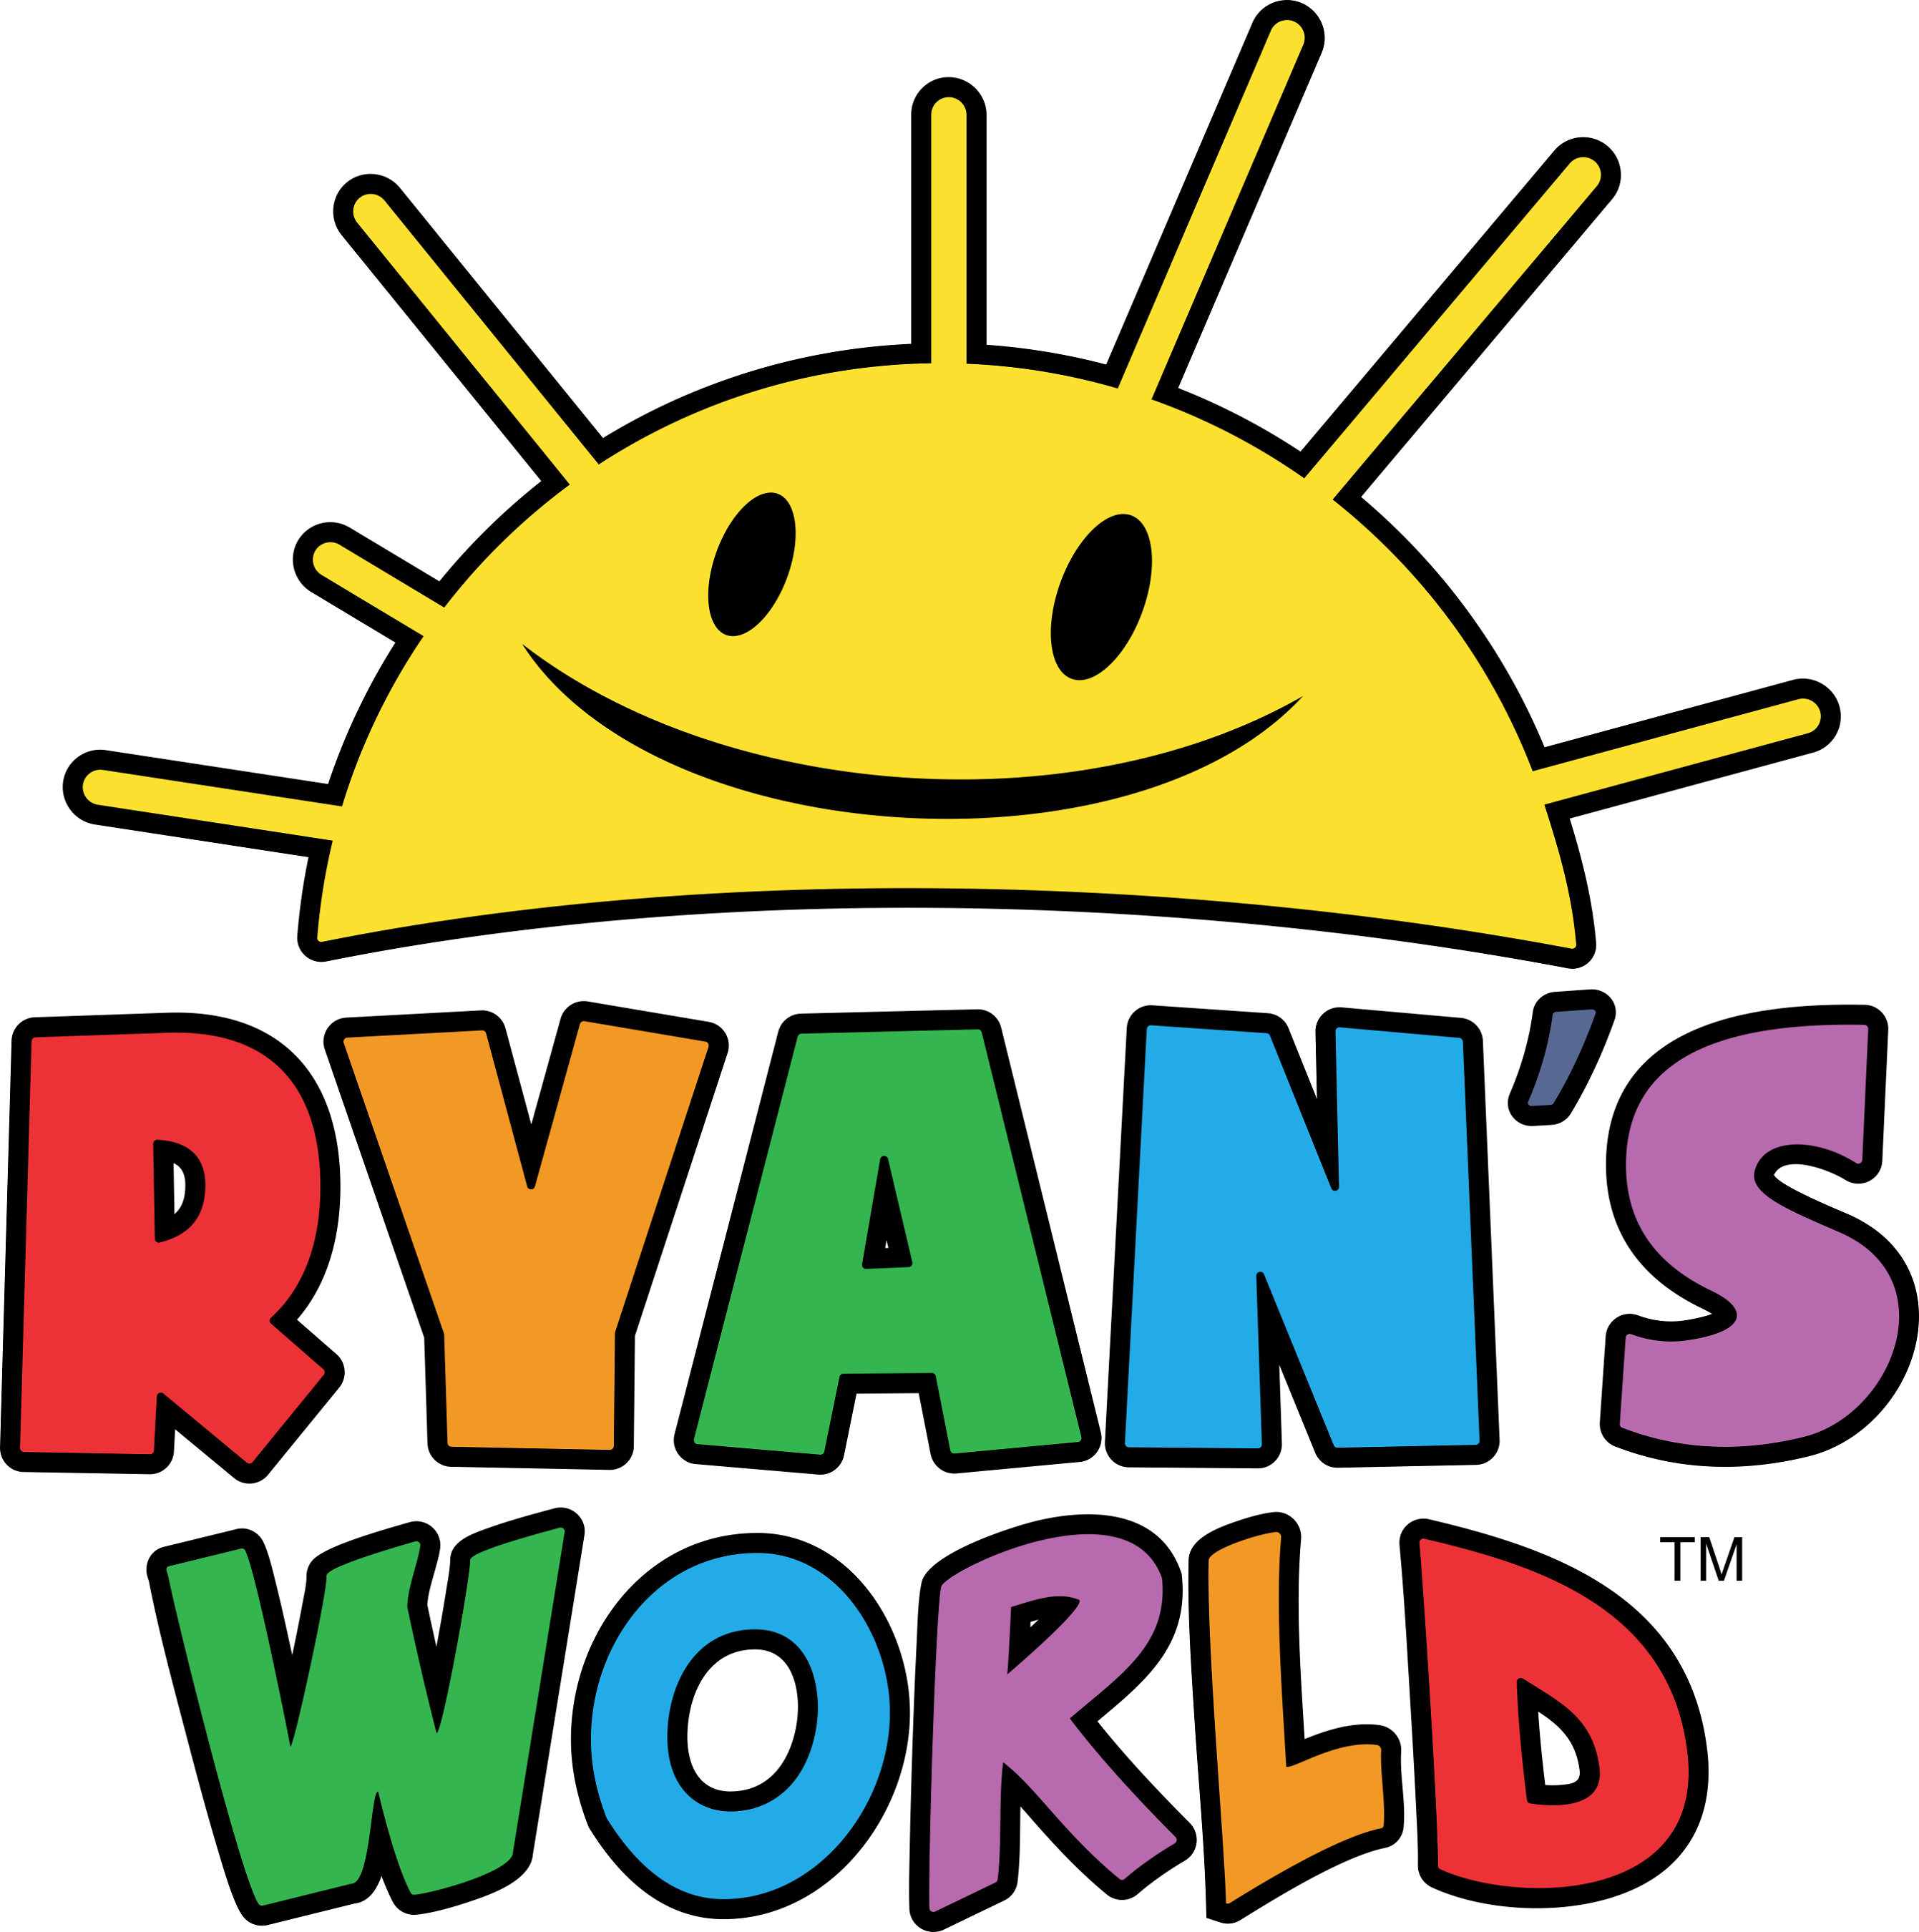 Best Ryan's World Birthday Party image. Ryan toys, Birthday, Birthday parties